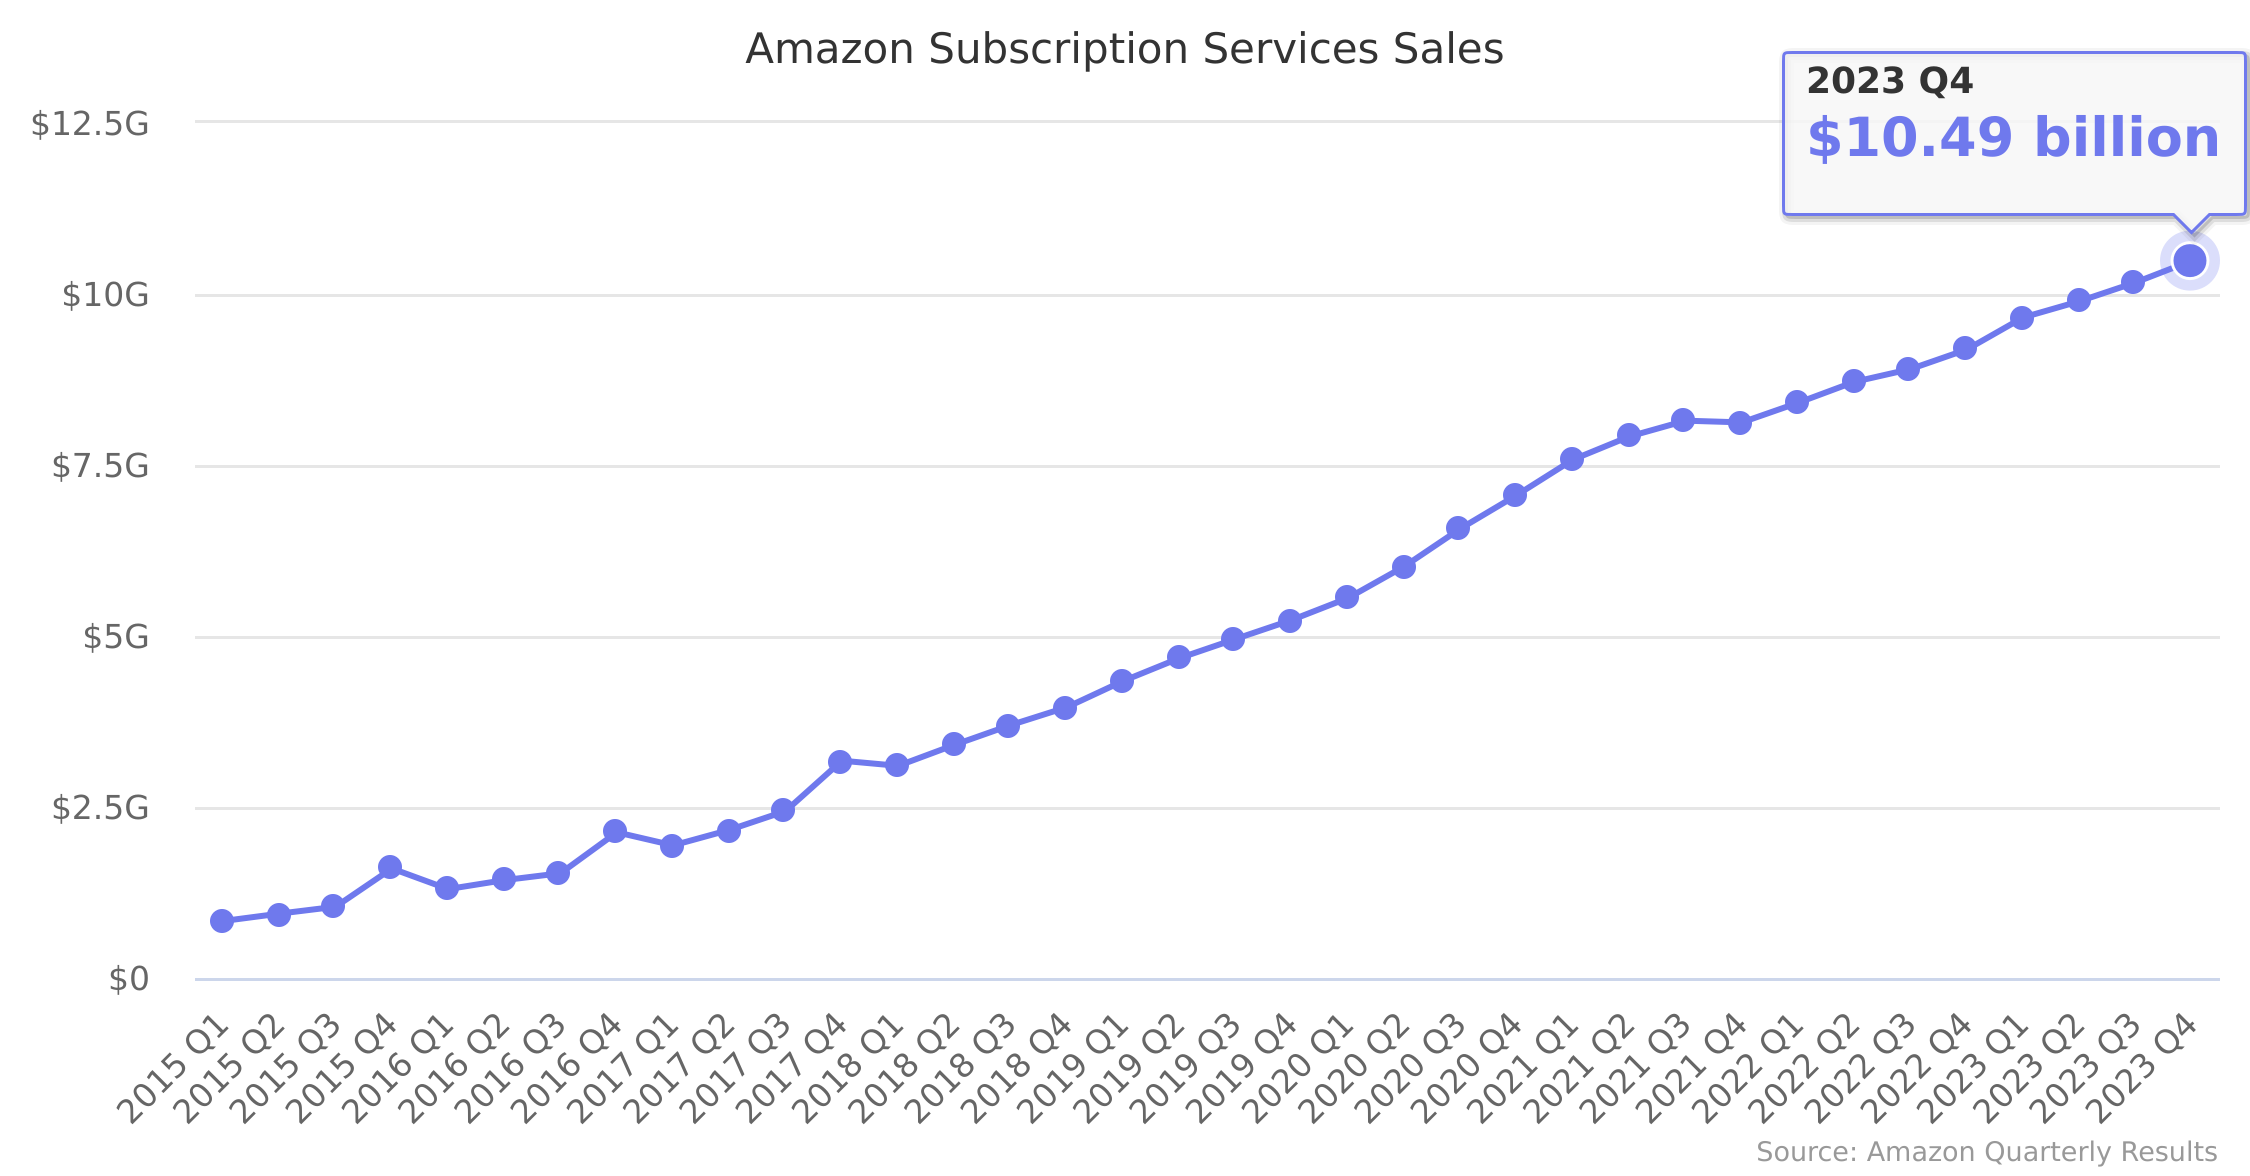 Amazon Subscription Services Sales 2015-2023